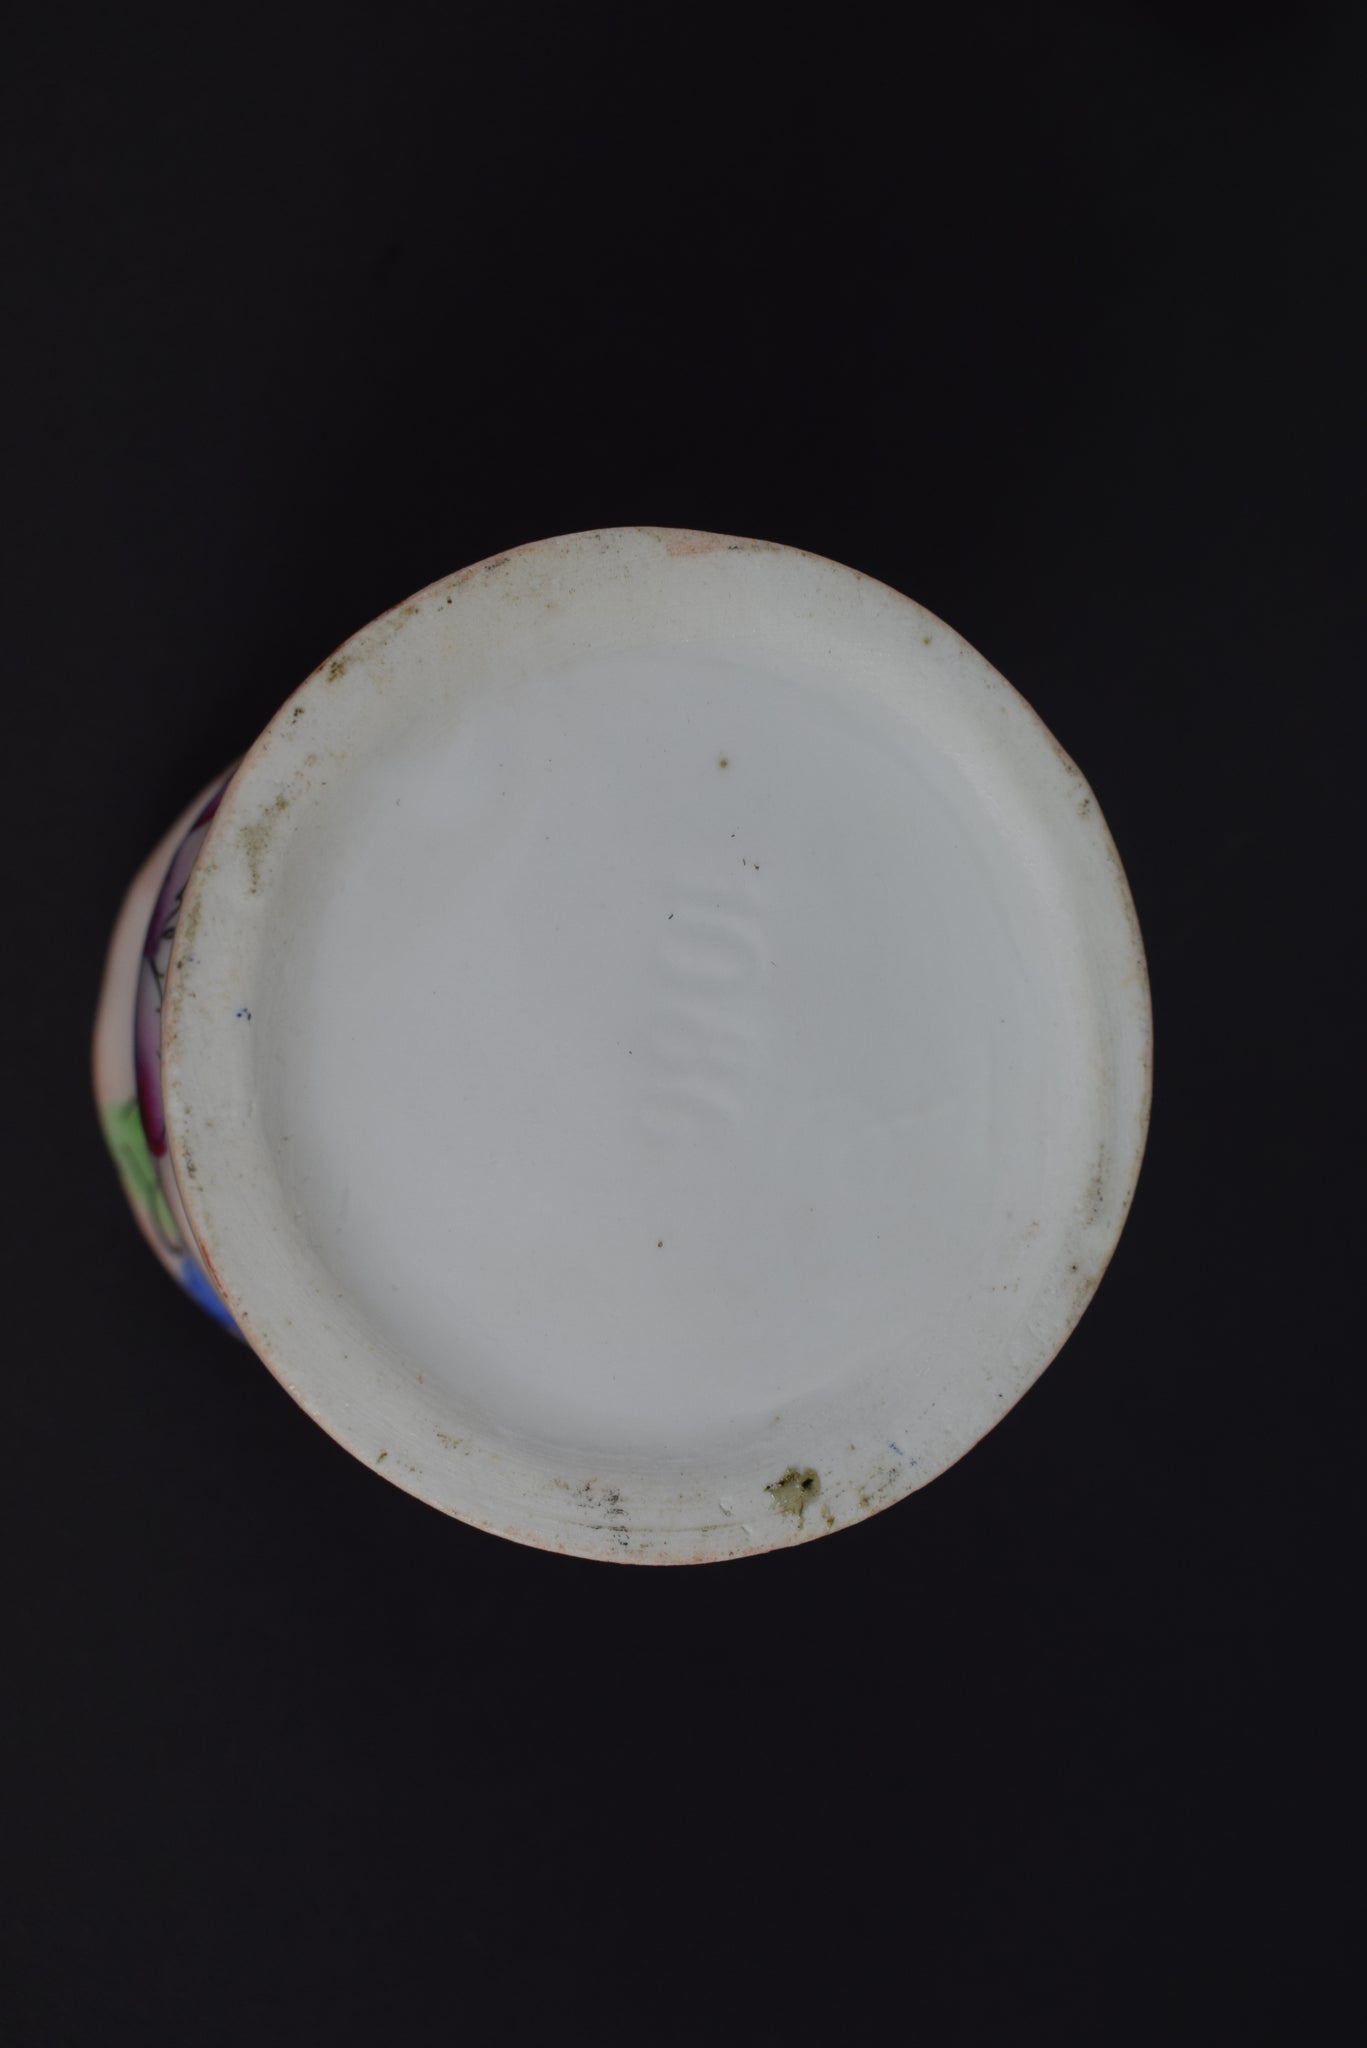 Small herbal tea pot Bayeux porcelain